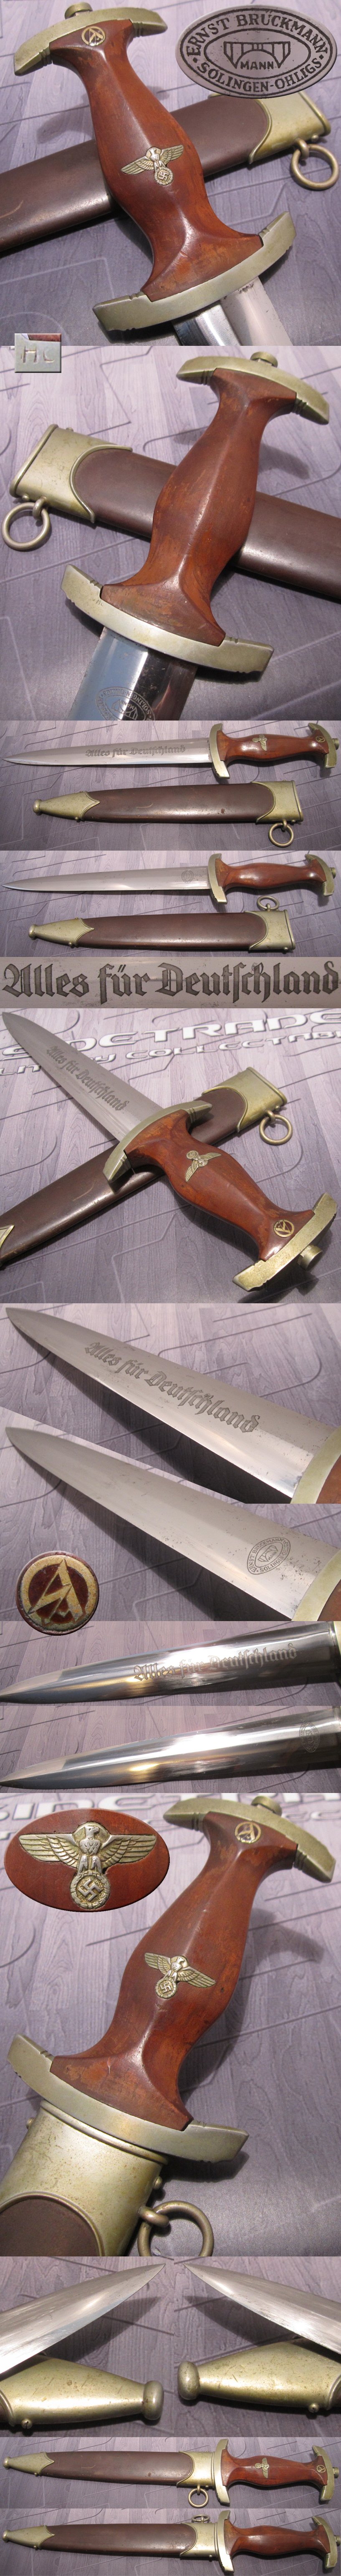 Early SA Dagger by Ernst Bruckmann